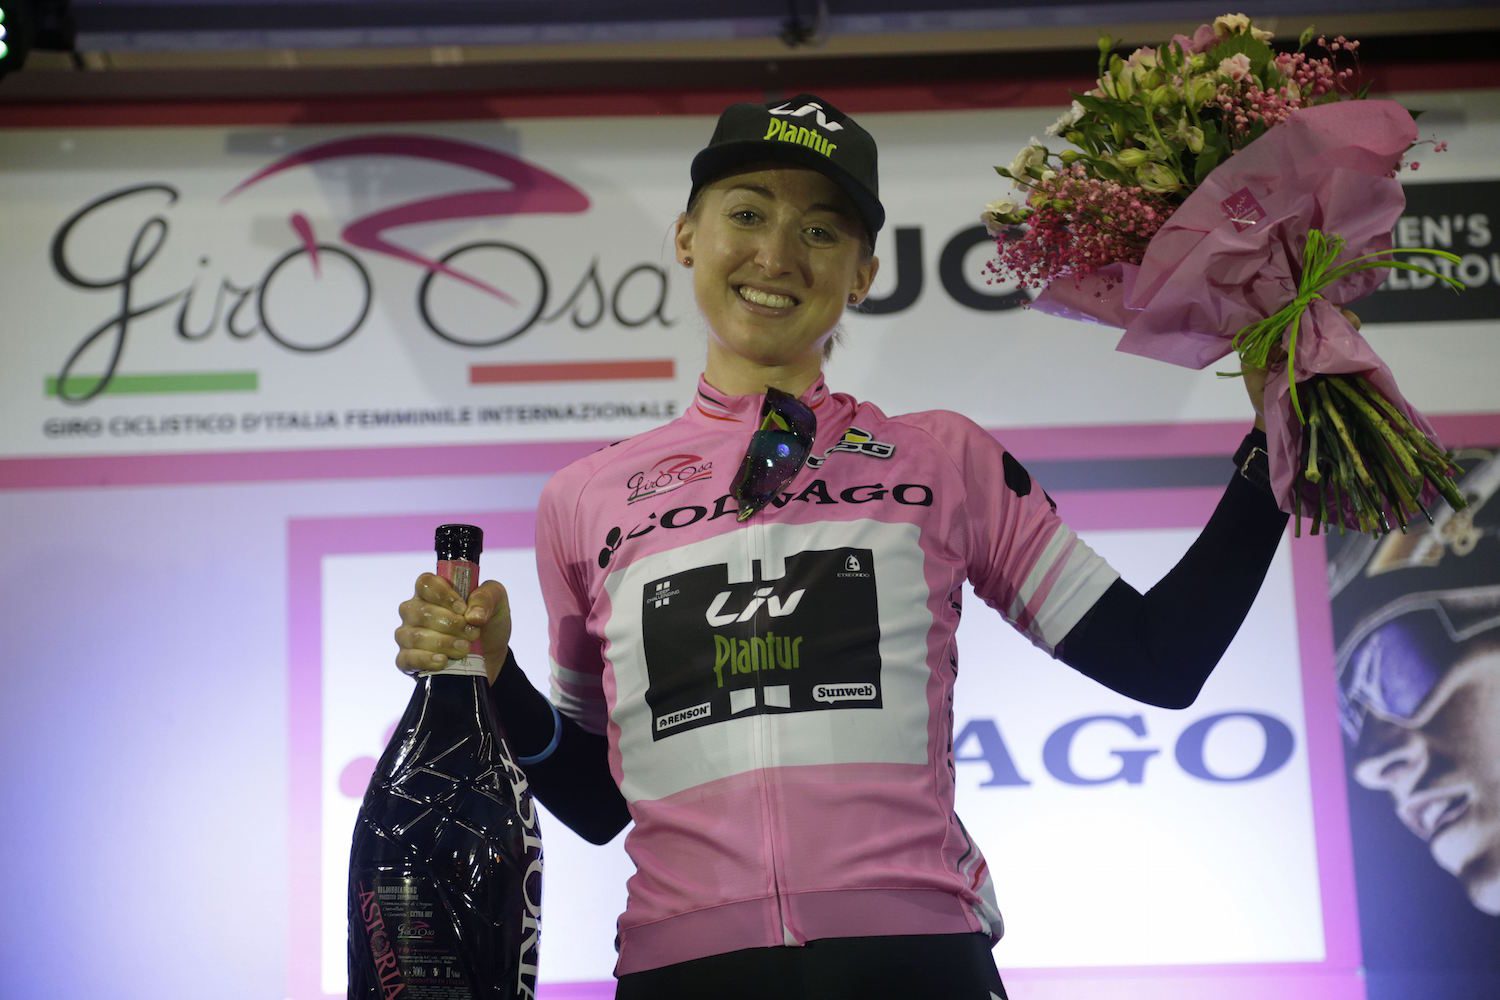 Giro d’Italia Internazionale Femminile 2016 proloog